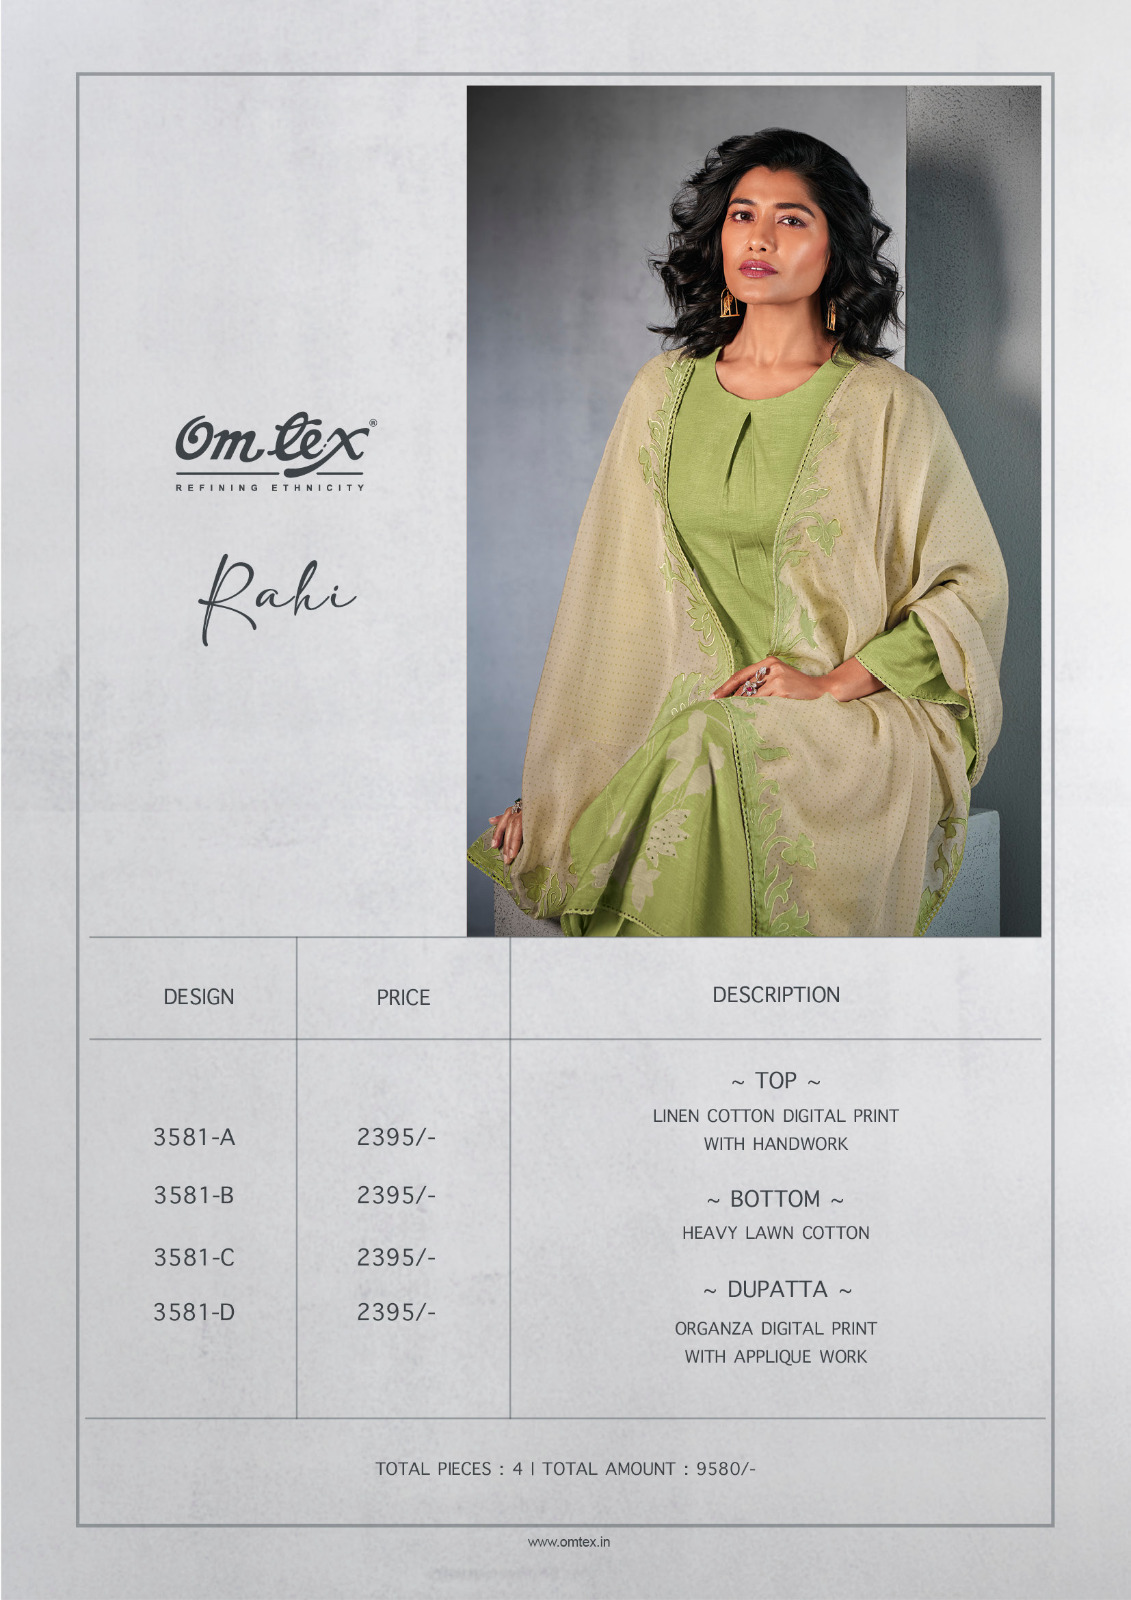 Omtex Rahi collection 1